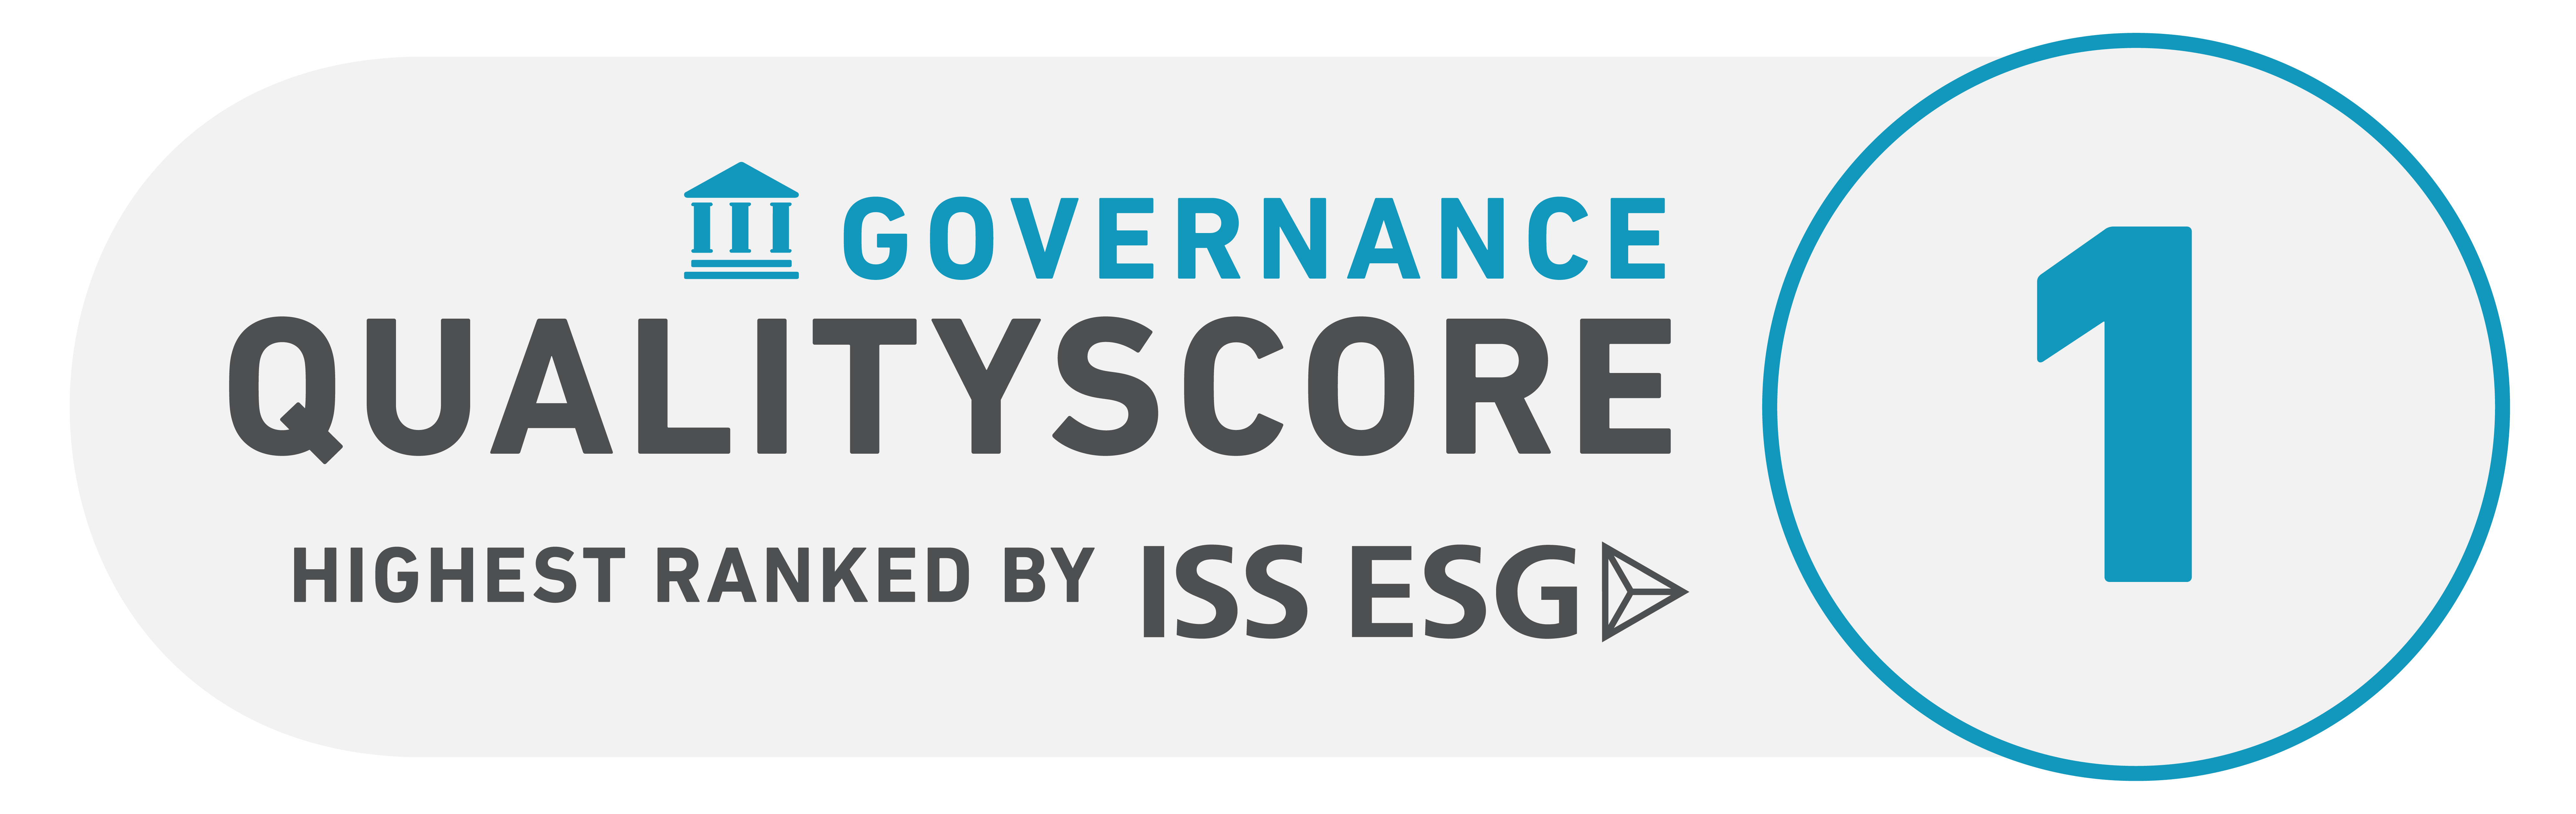 qualityscore governance badge